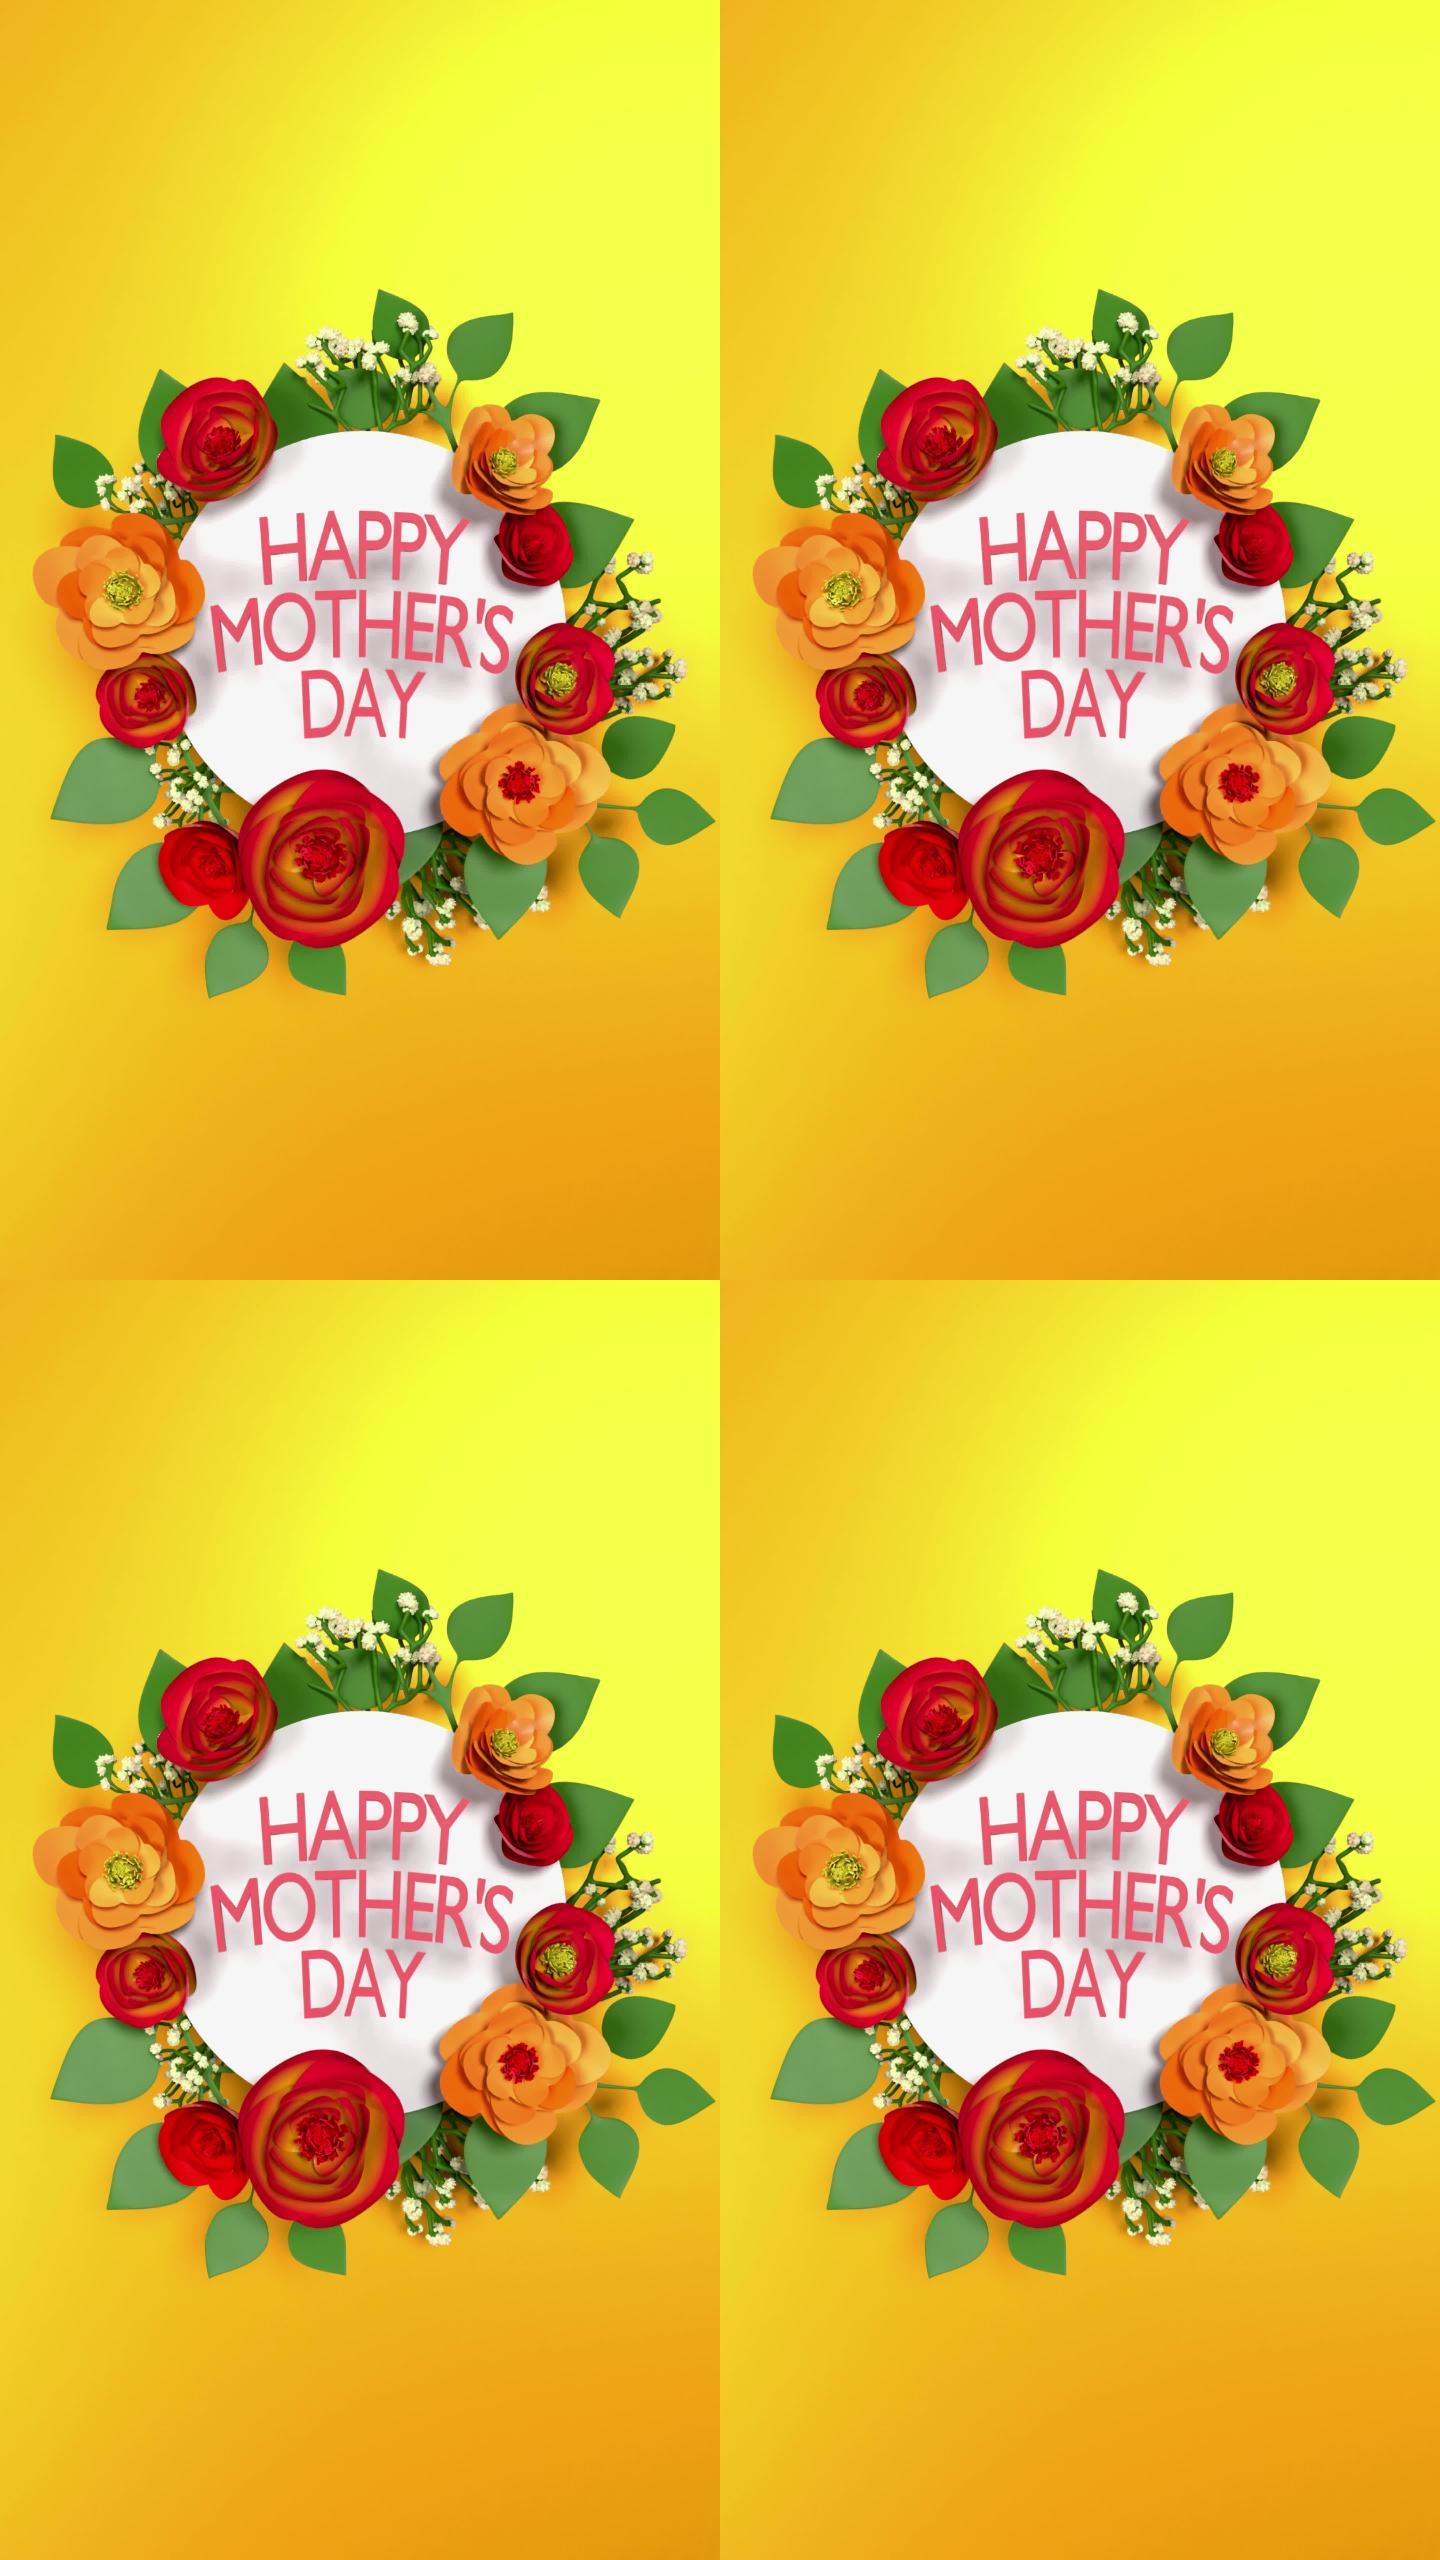 4k分辨率的垂直“母亲节快乐”文本和鲜花庆祝母亲节循环就绪文件